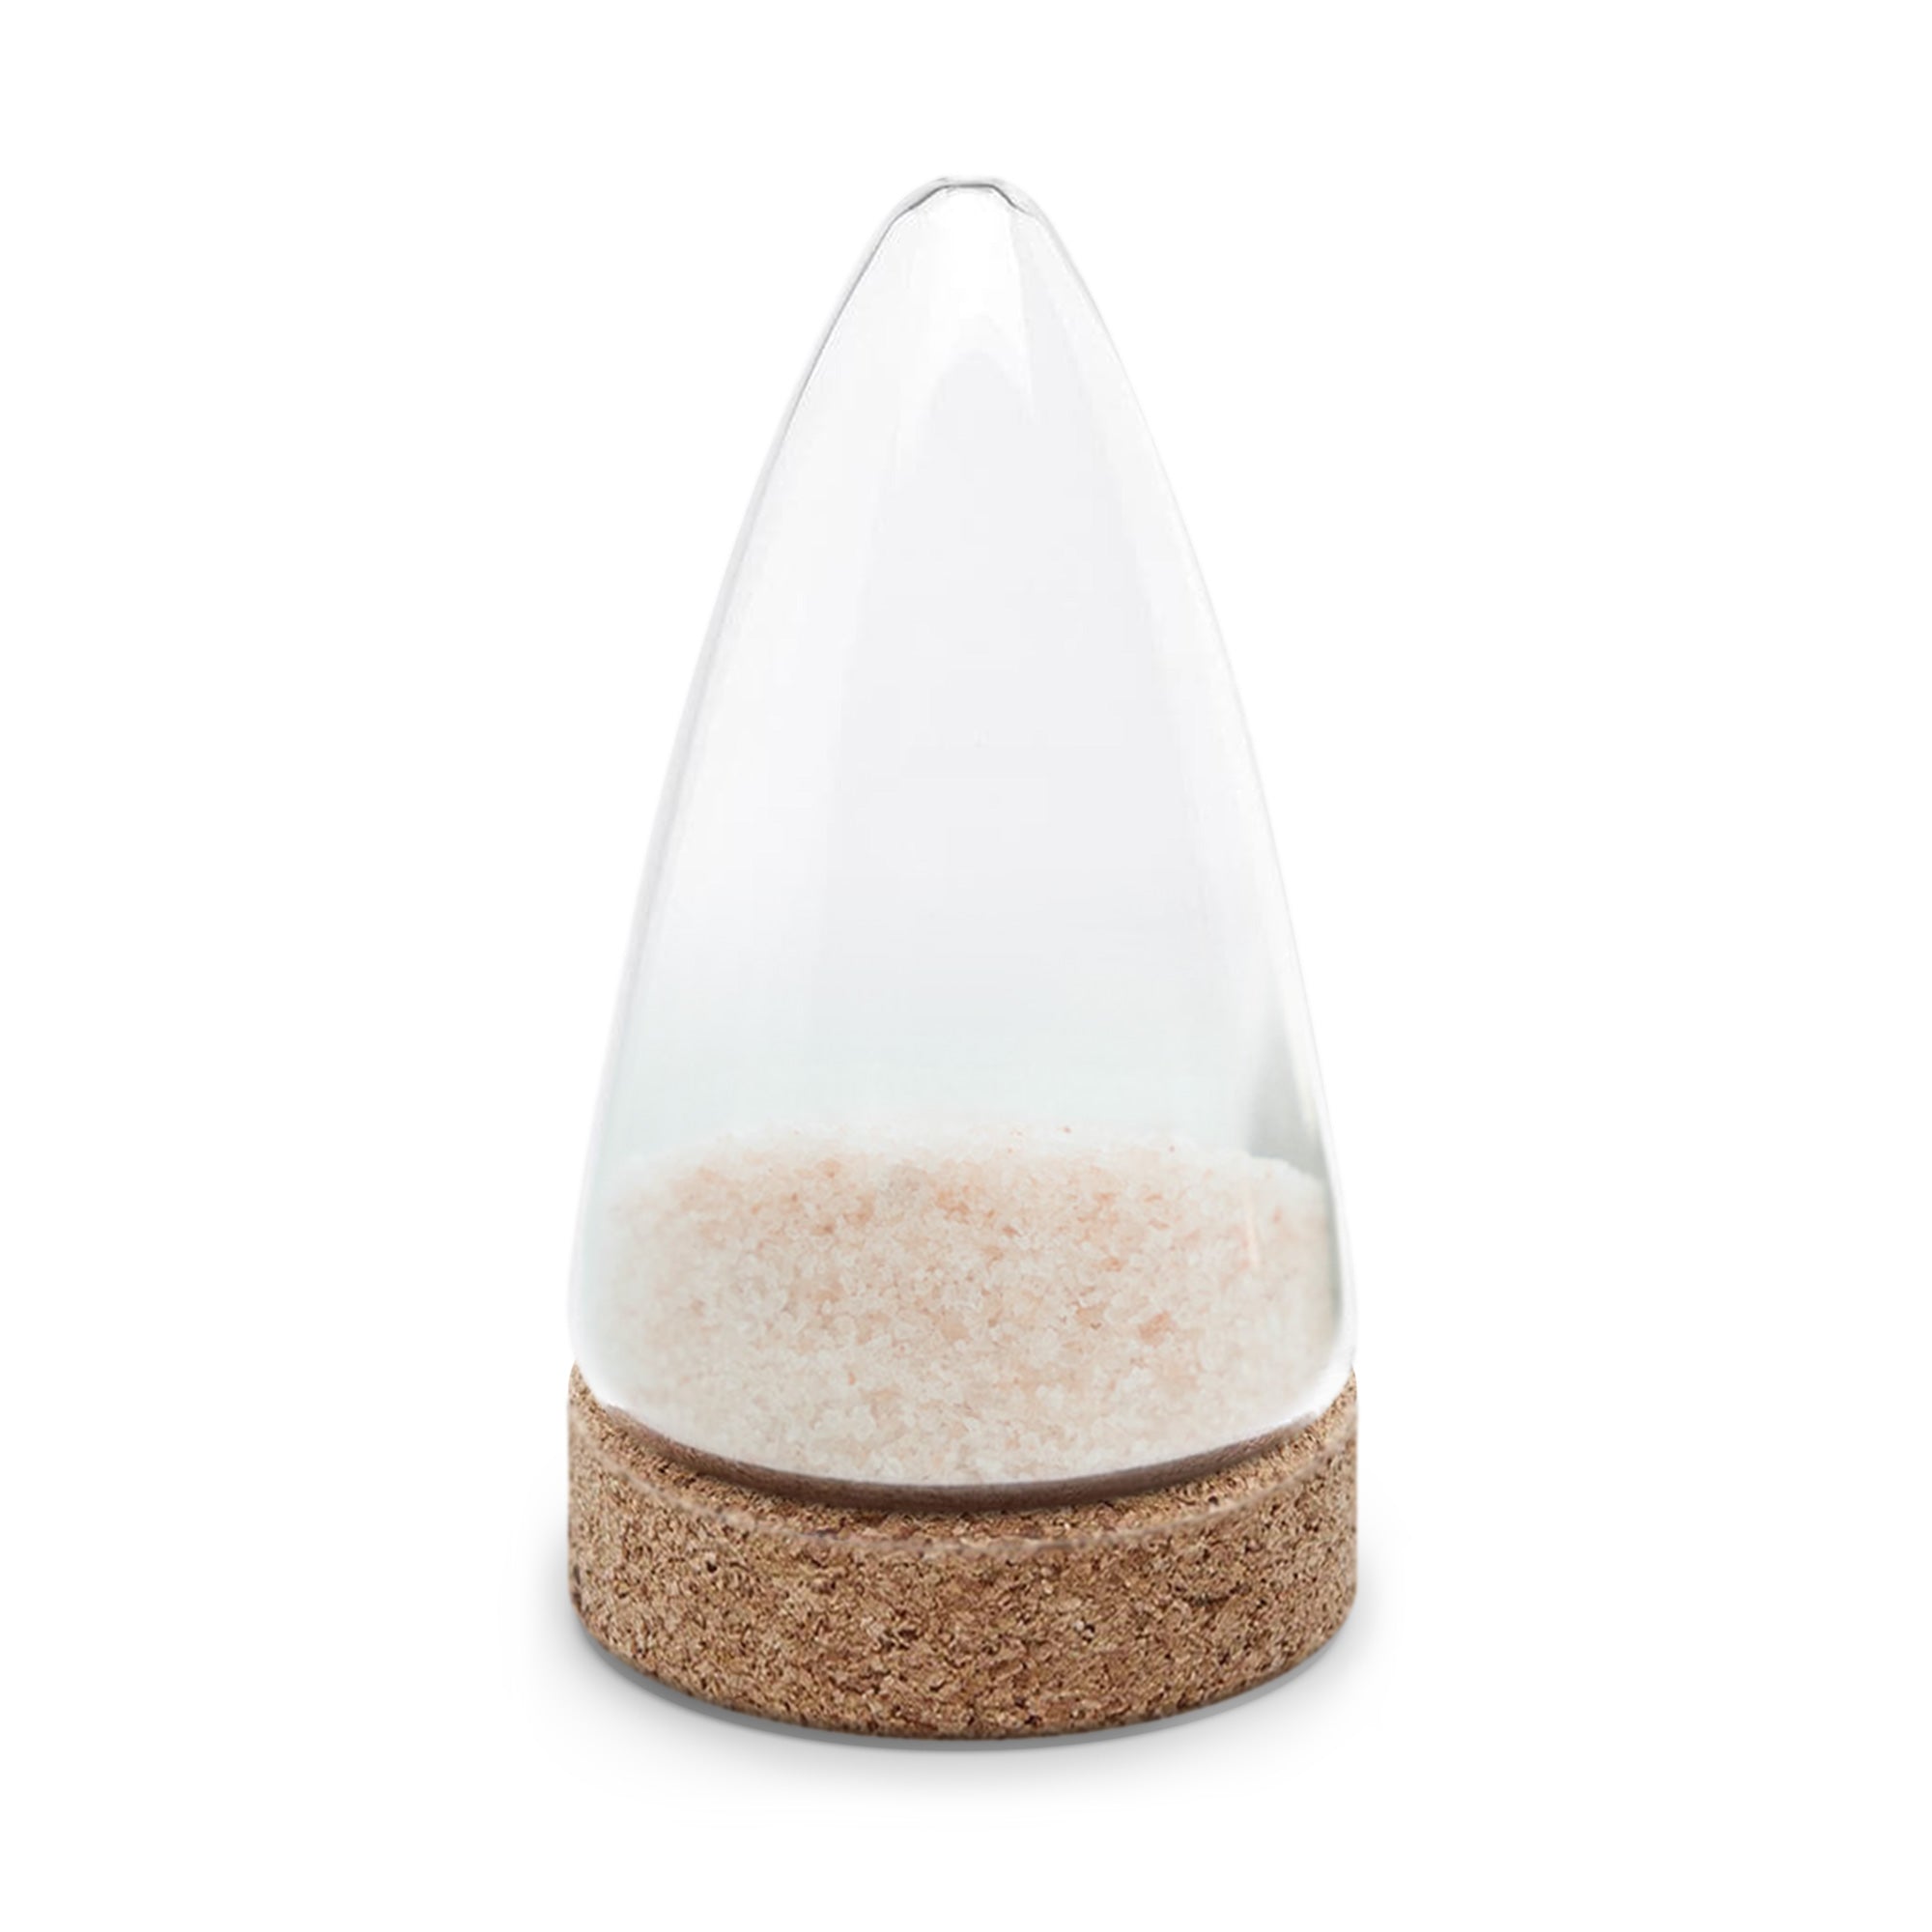 Fine Granulated Culinary Salt + Salt Shaker